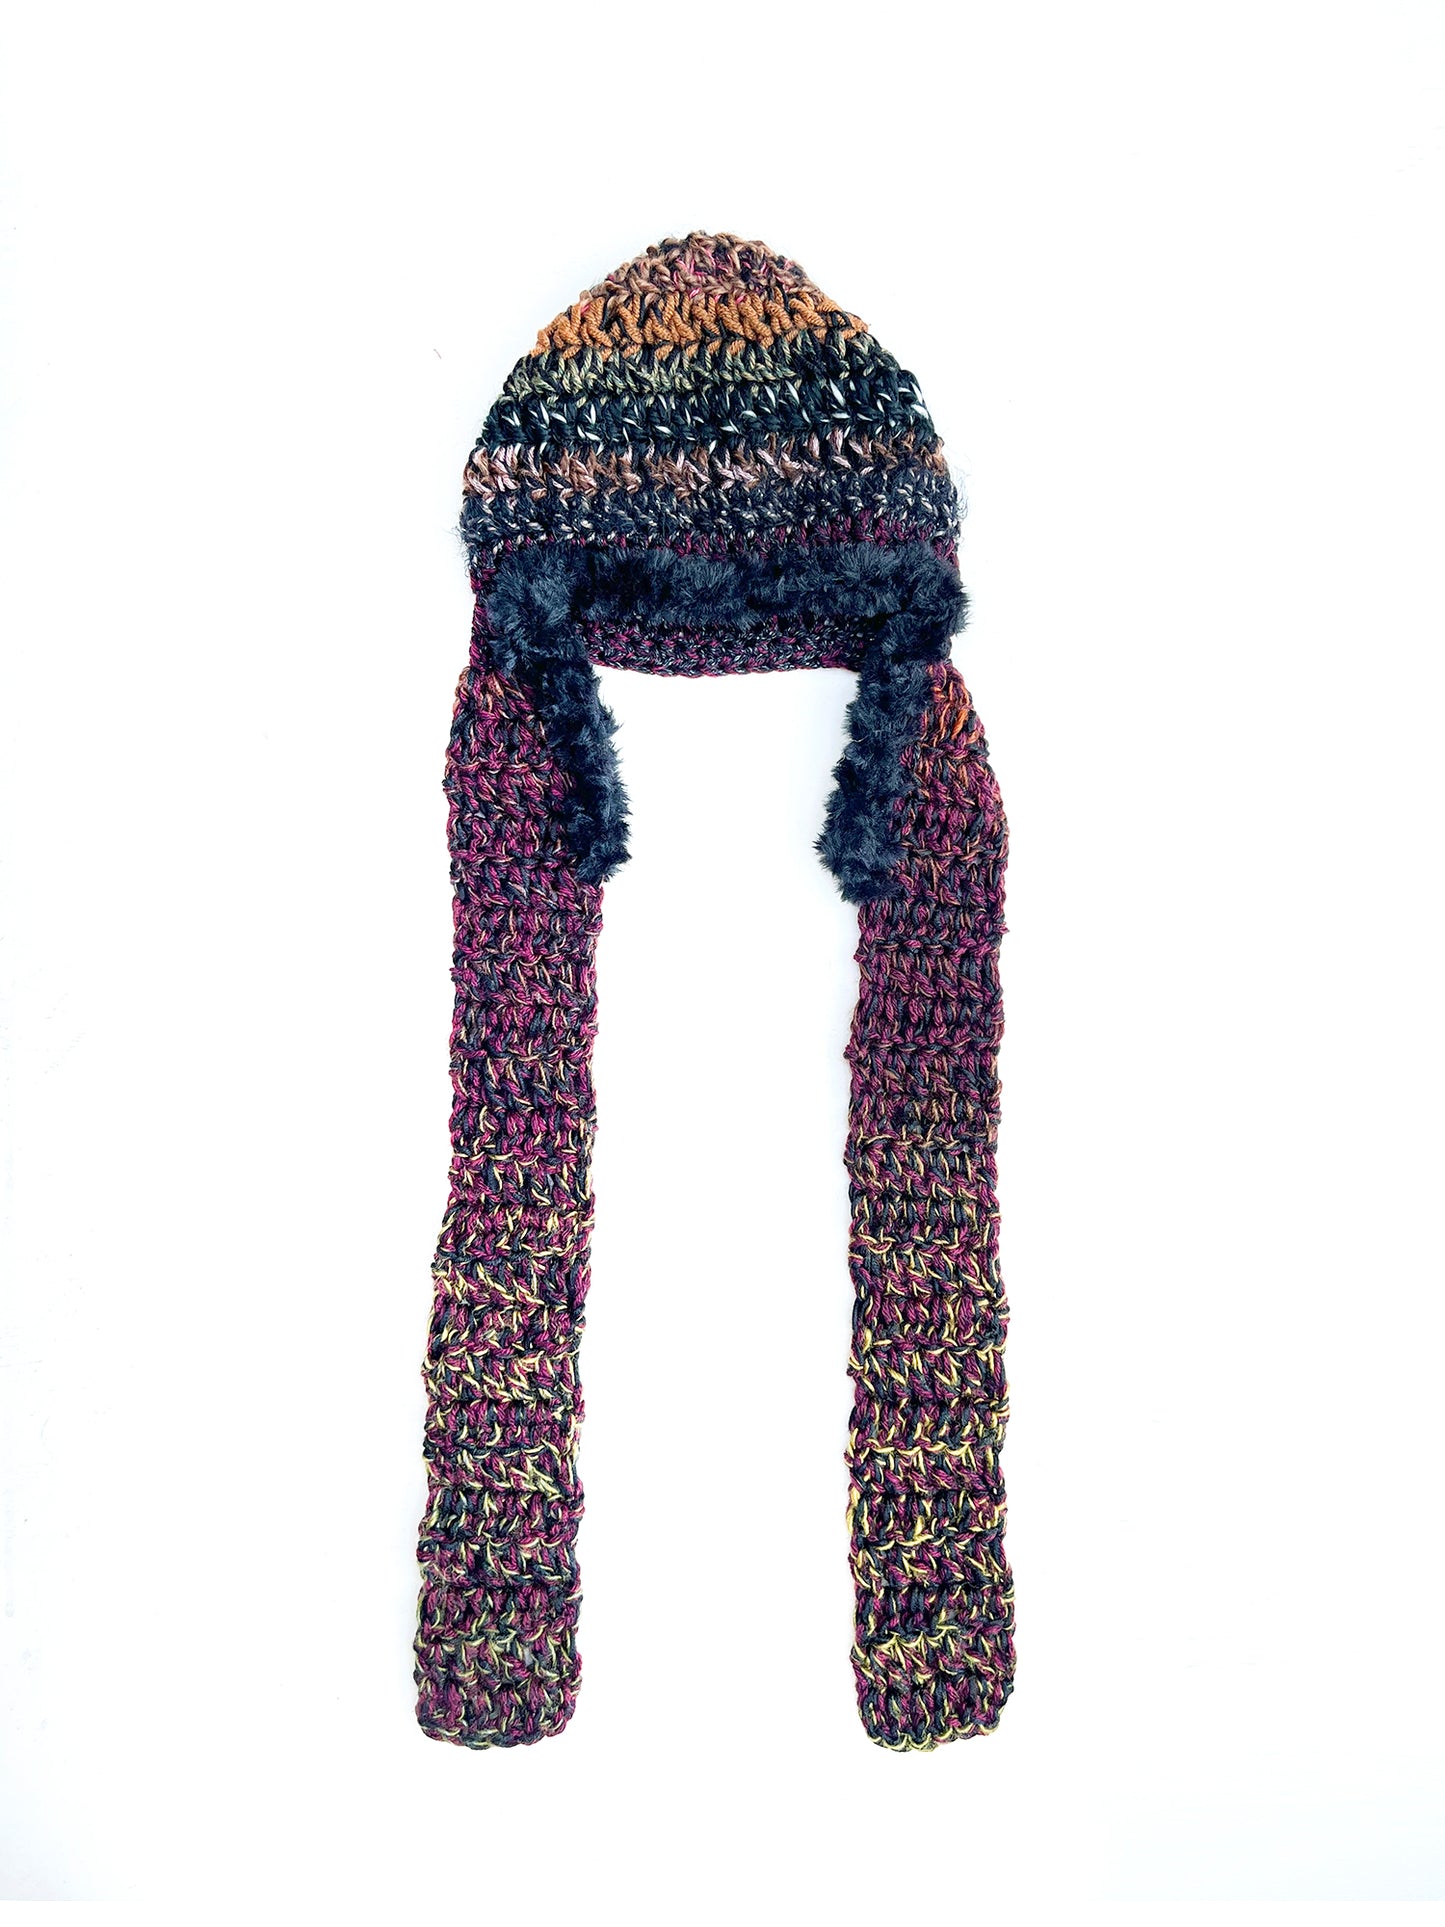 Cool Cat Crochet Hat #6 S/M